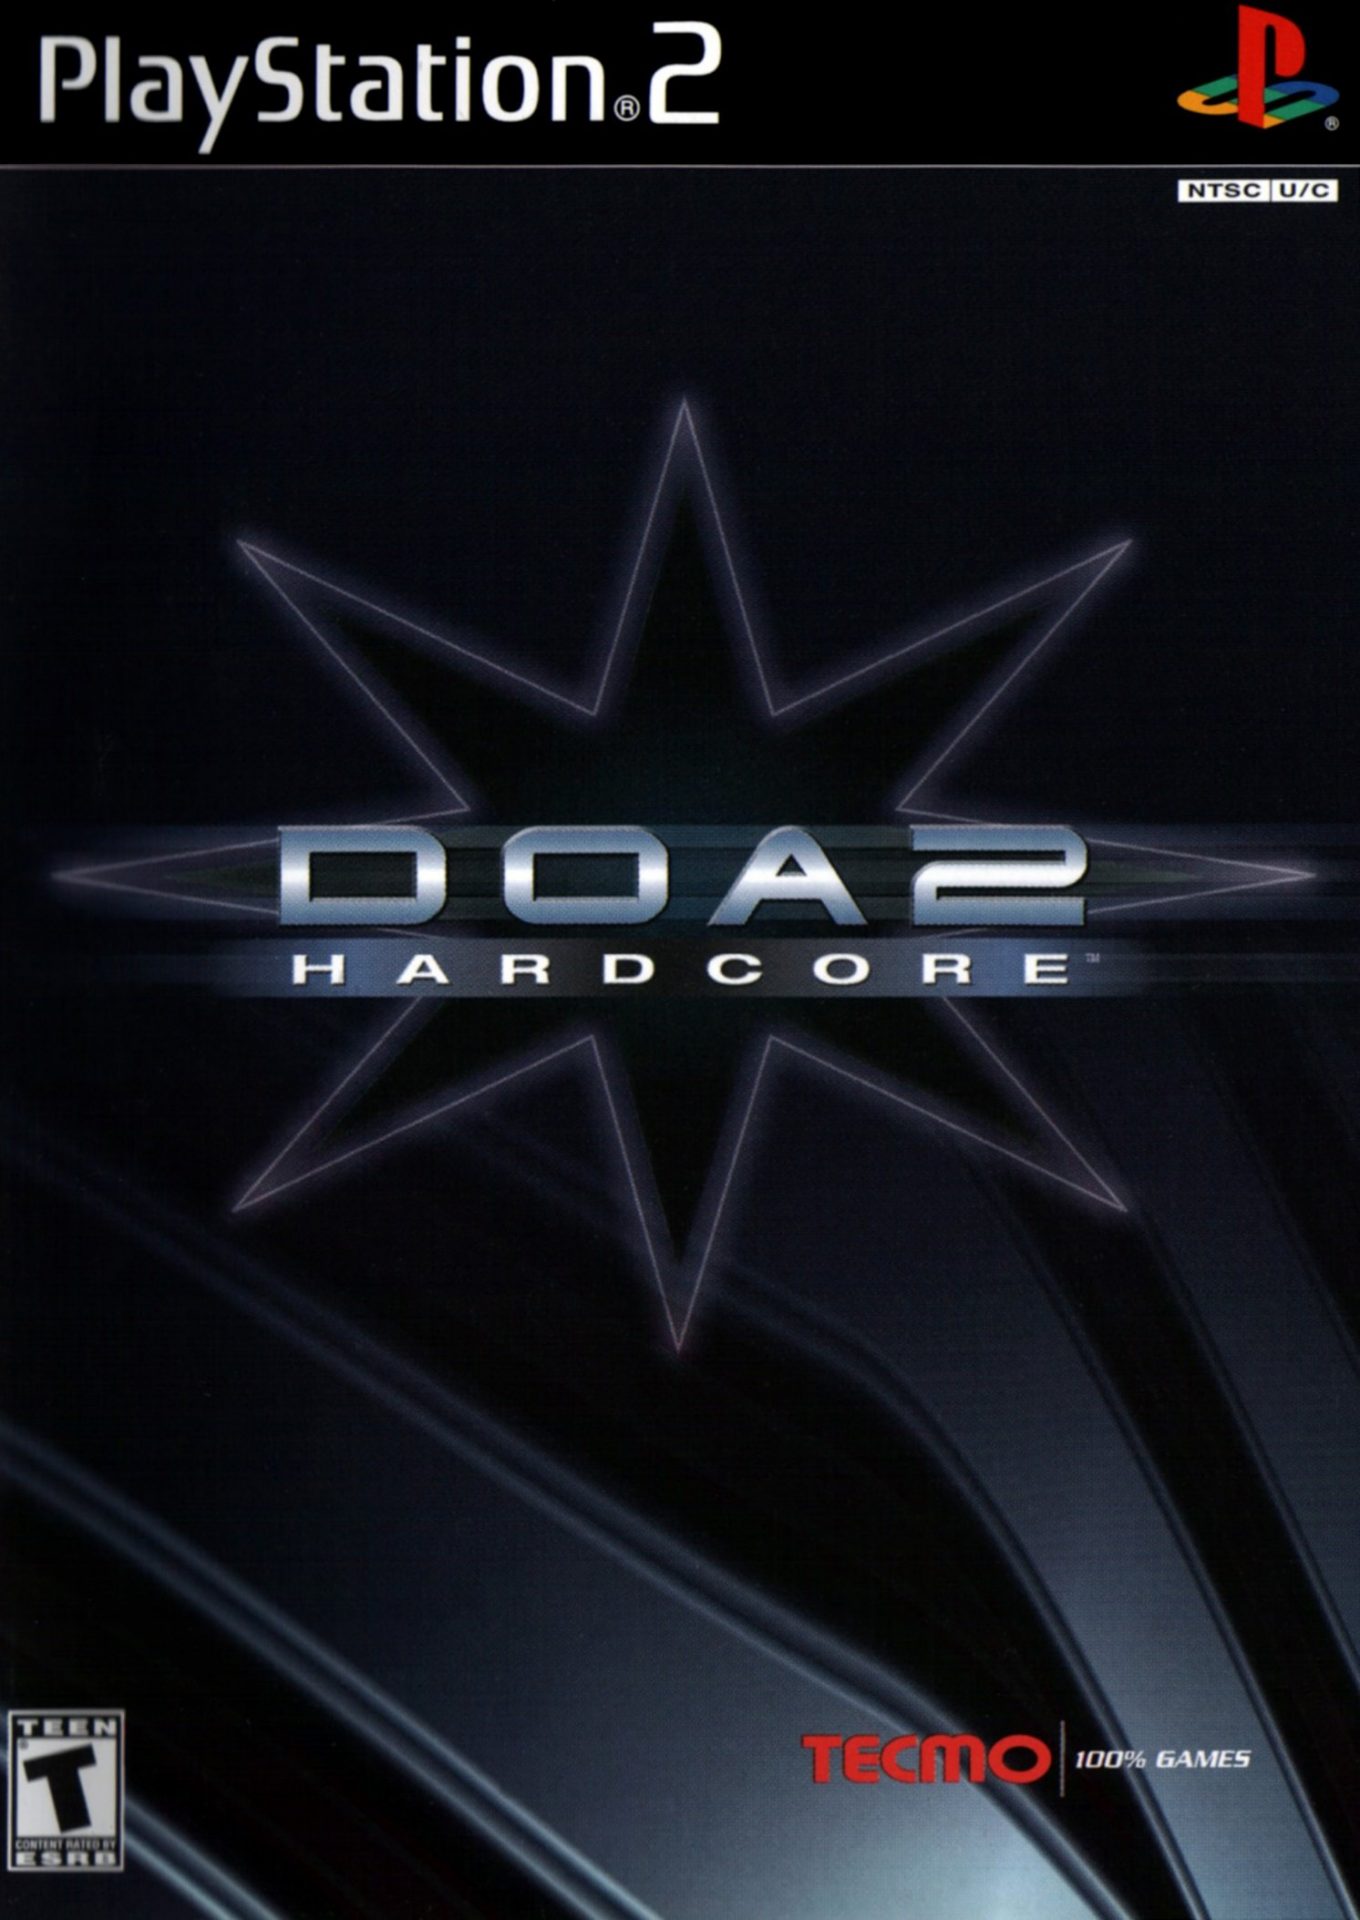 The coverart image of Dead or Alive 2: Hardcore